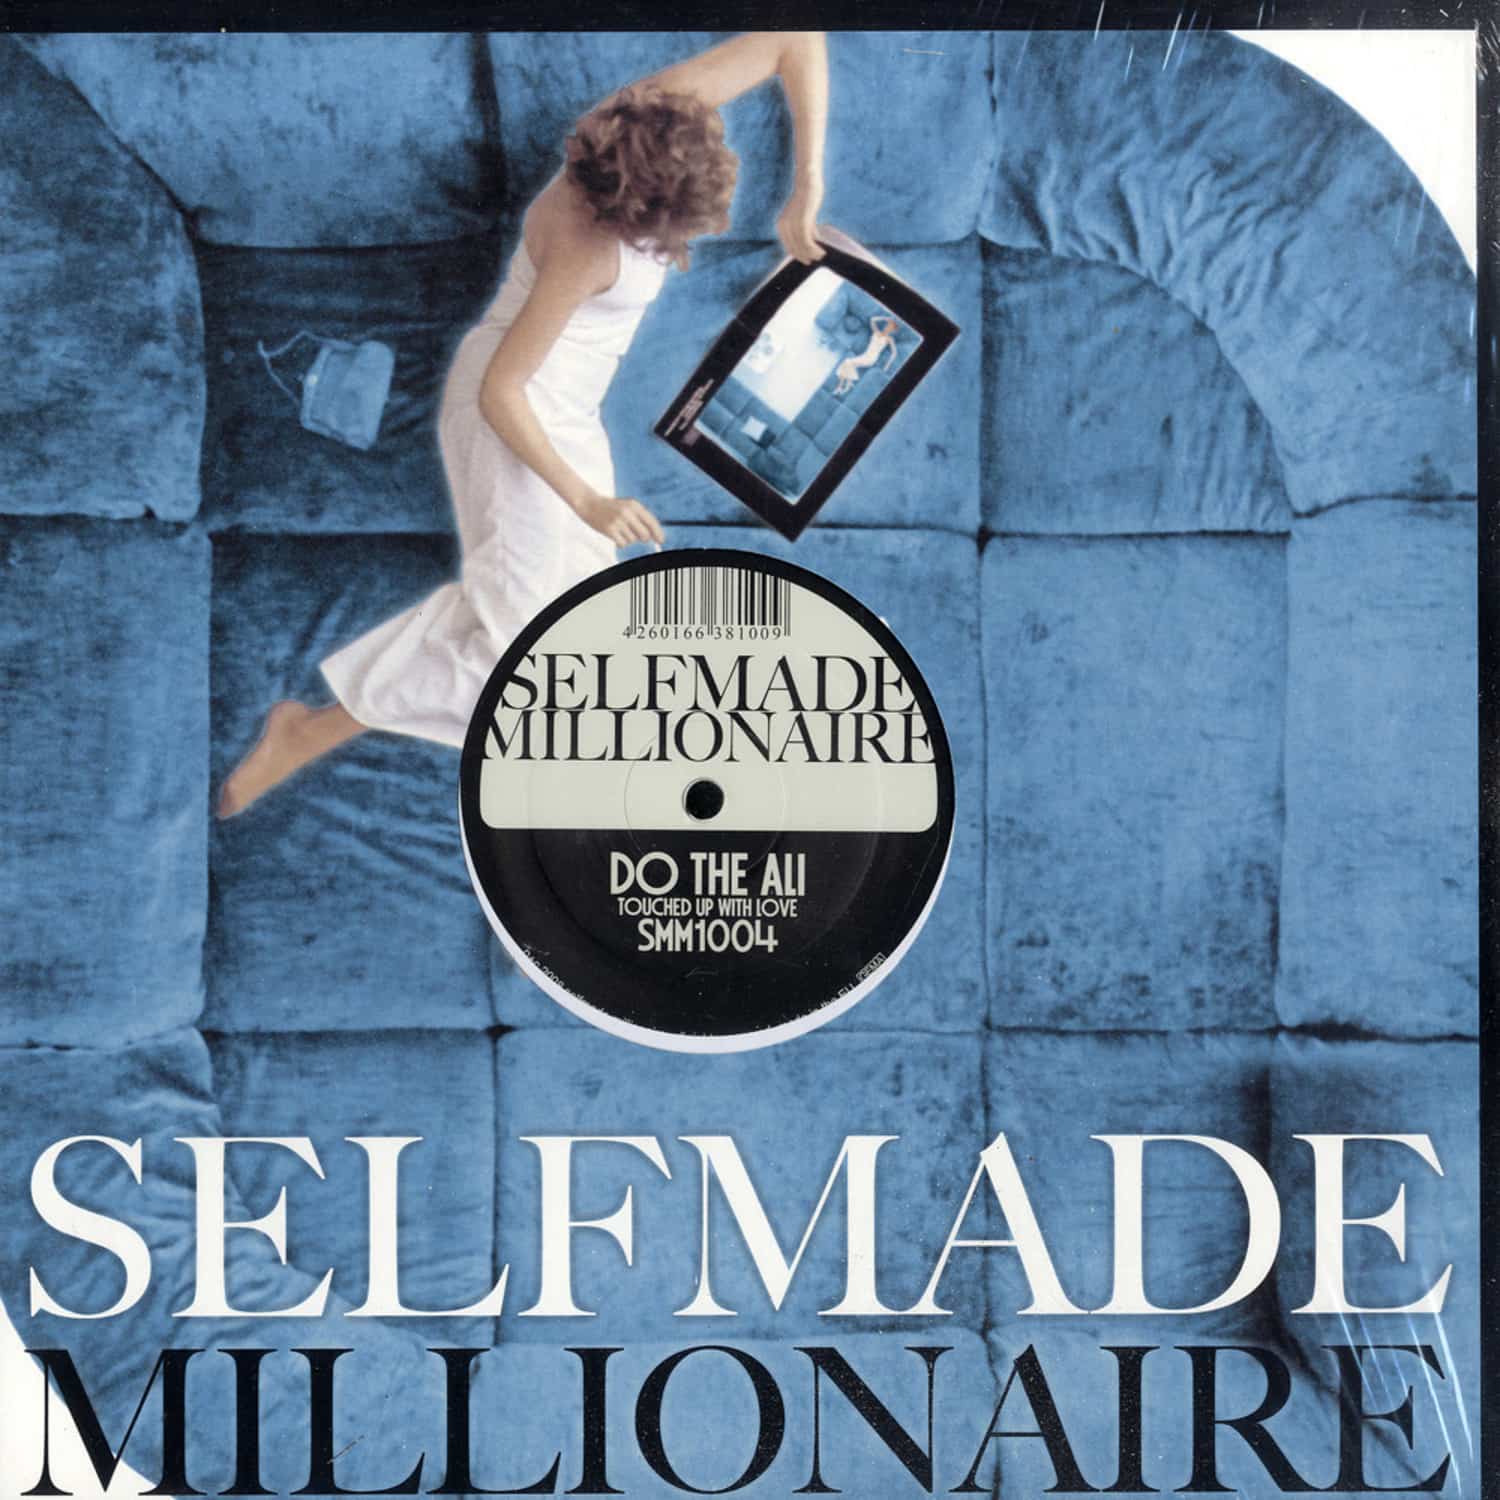 Selfmade Millionaire - DO THE ALI / EVEN GAVE YOU DIAMONDS